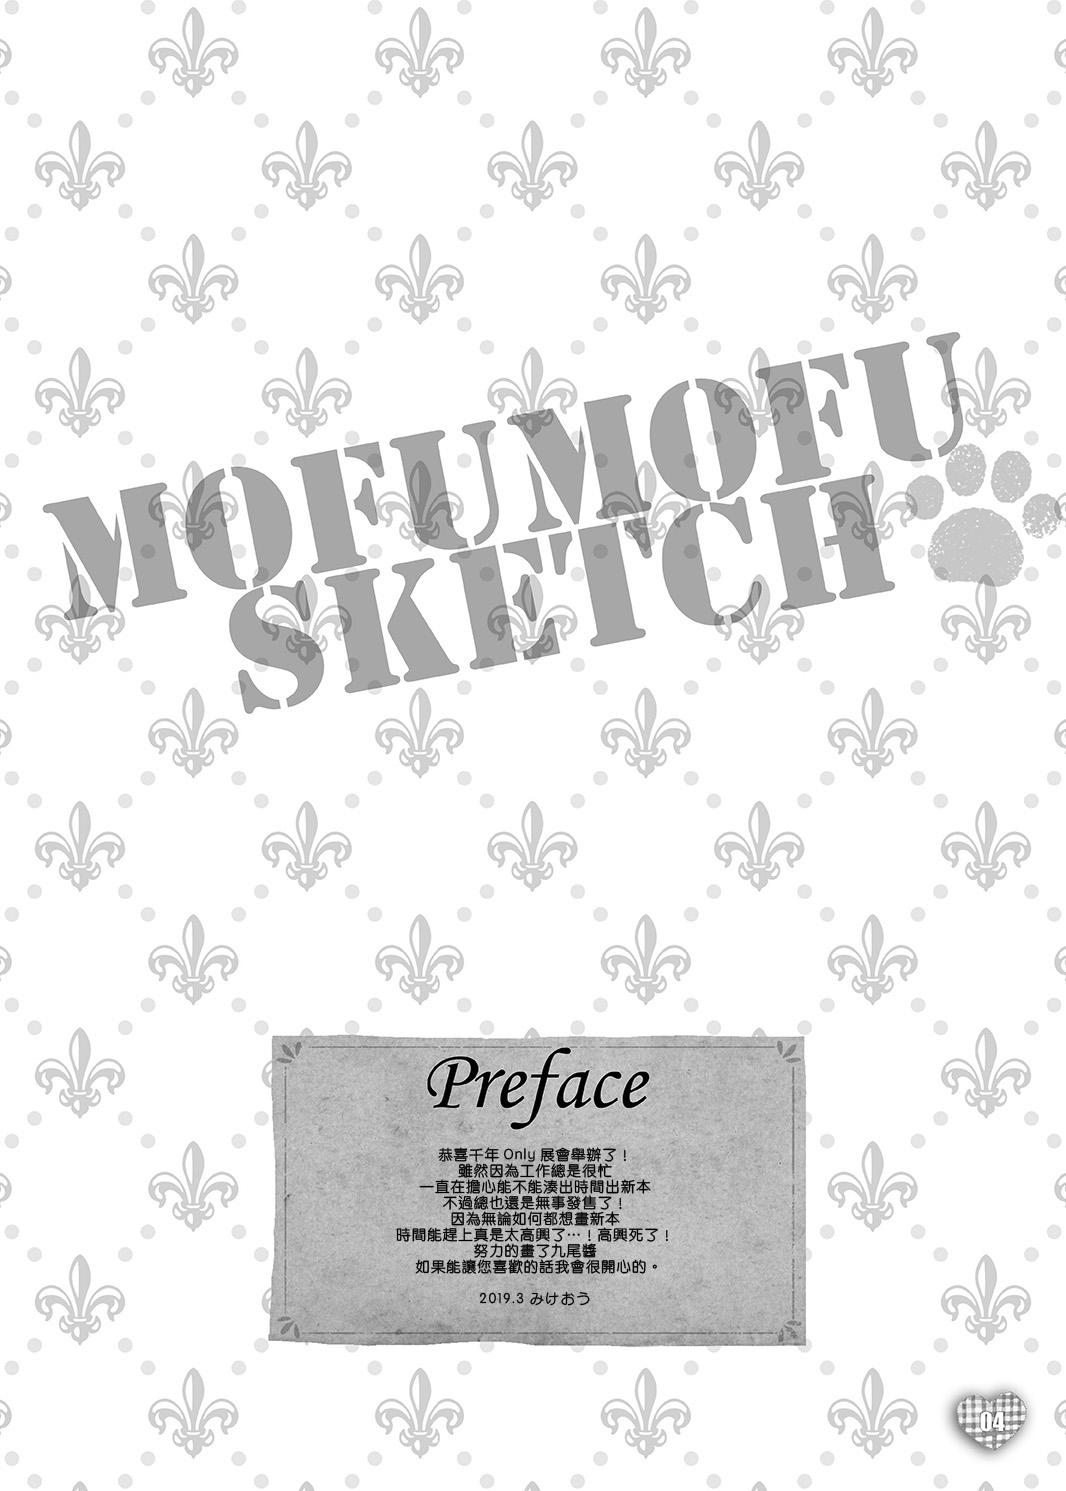 MOFUMOFU SKETCH 3